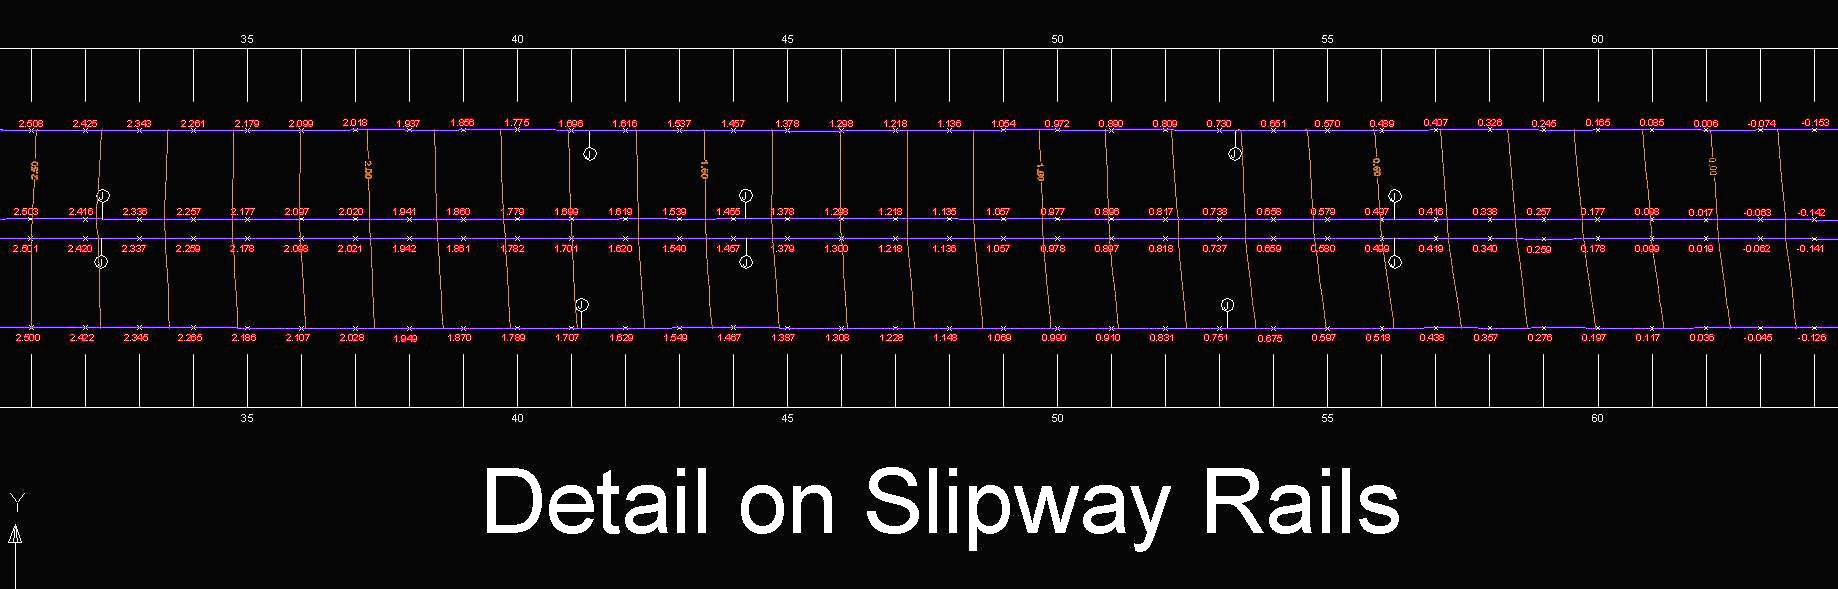 Newlyn Harbour slipway rails, level survey